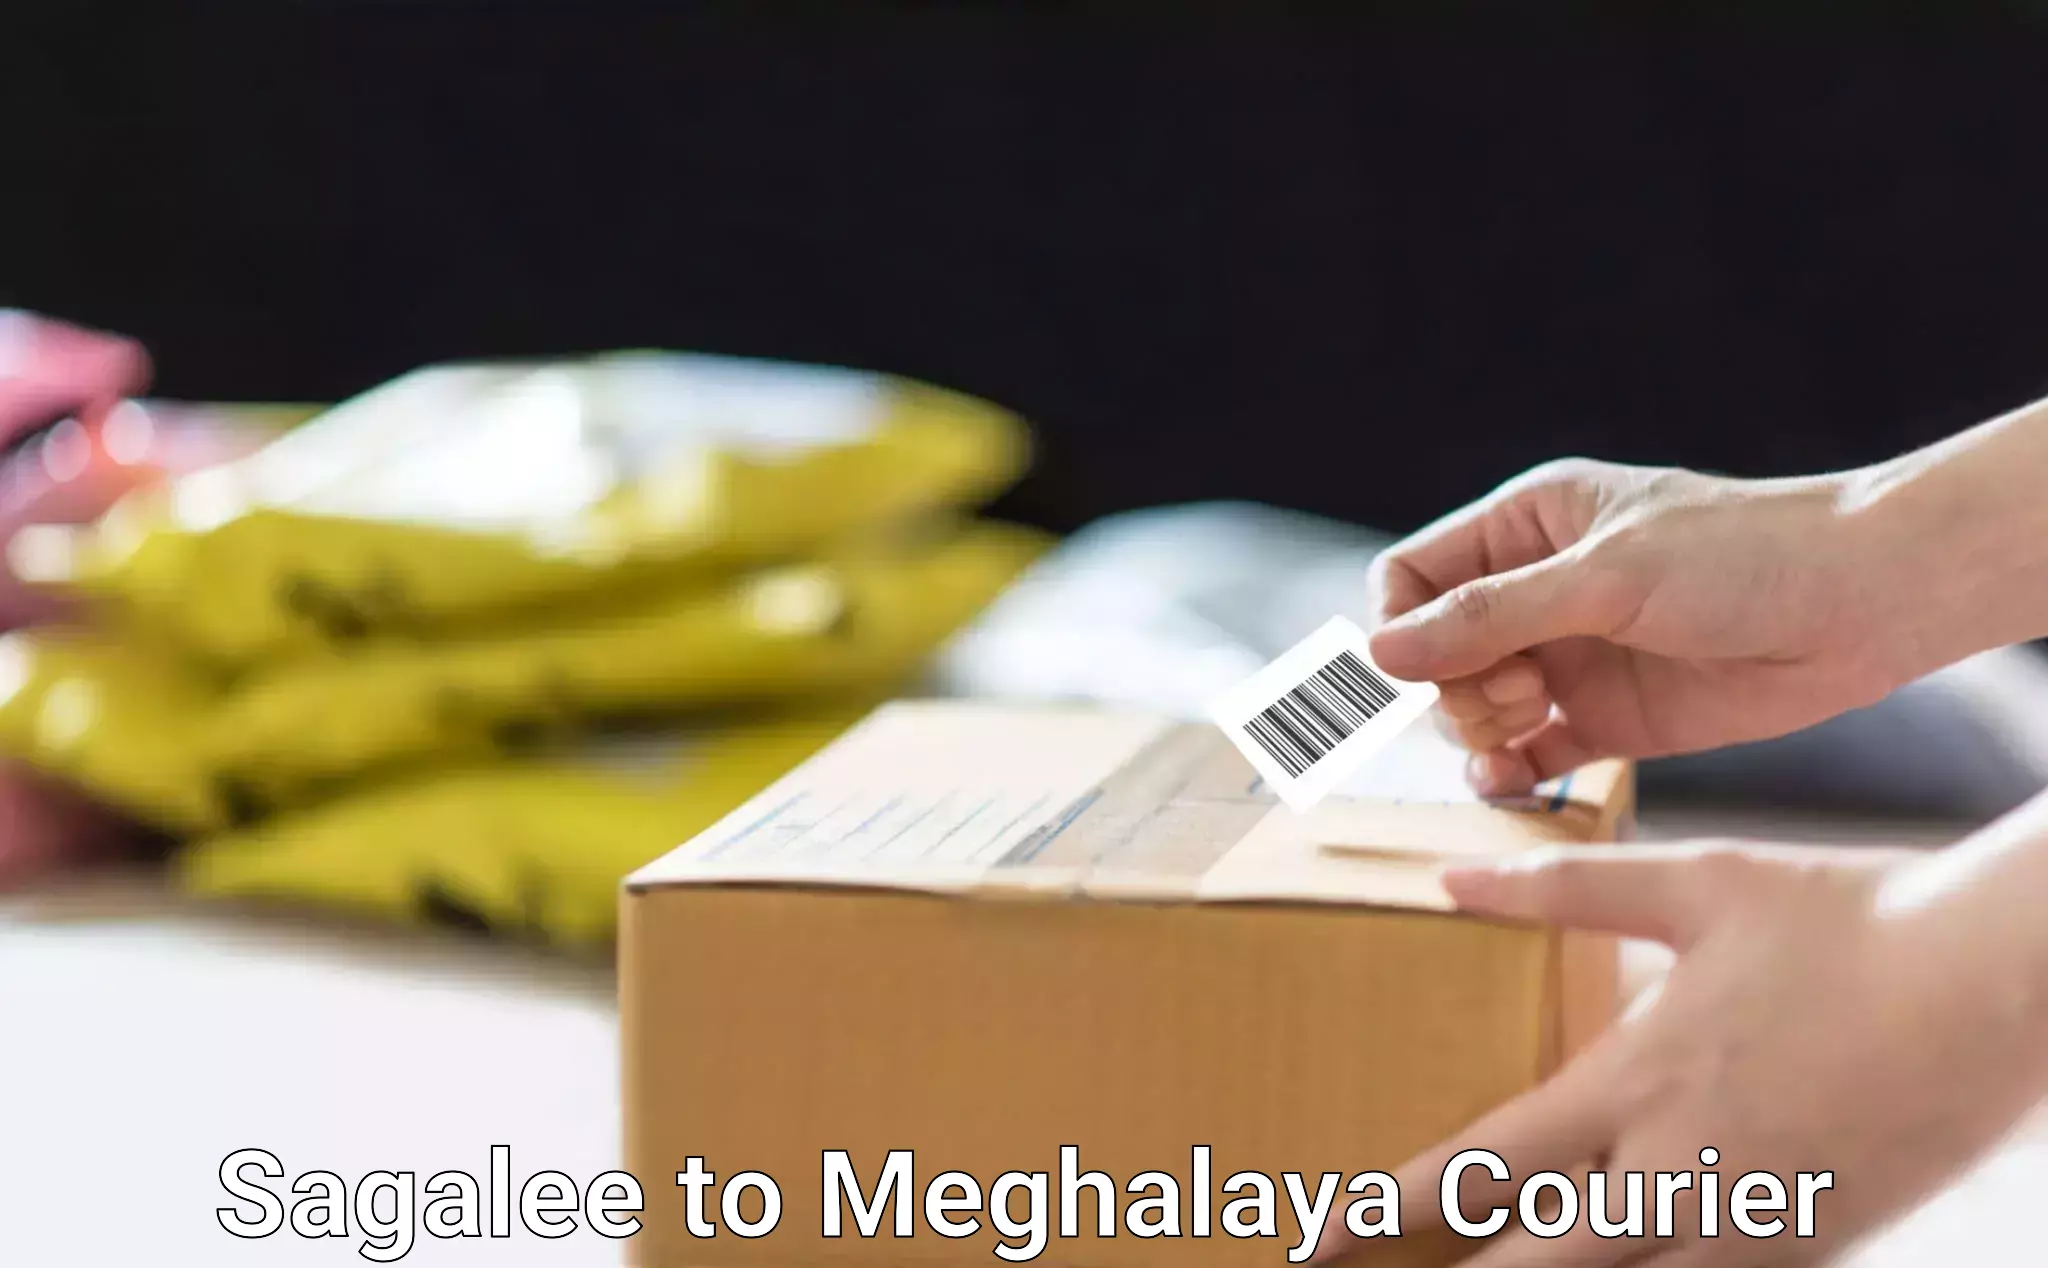 Global logistics network Sagalee to Meghalaya